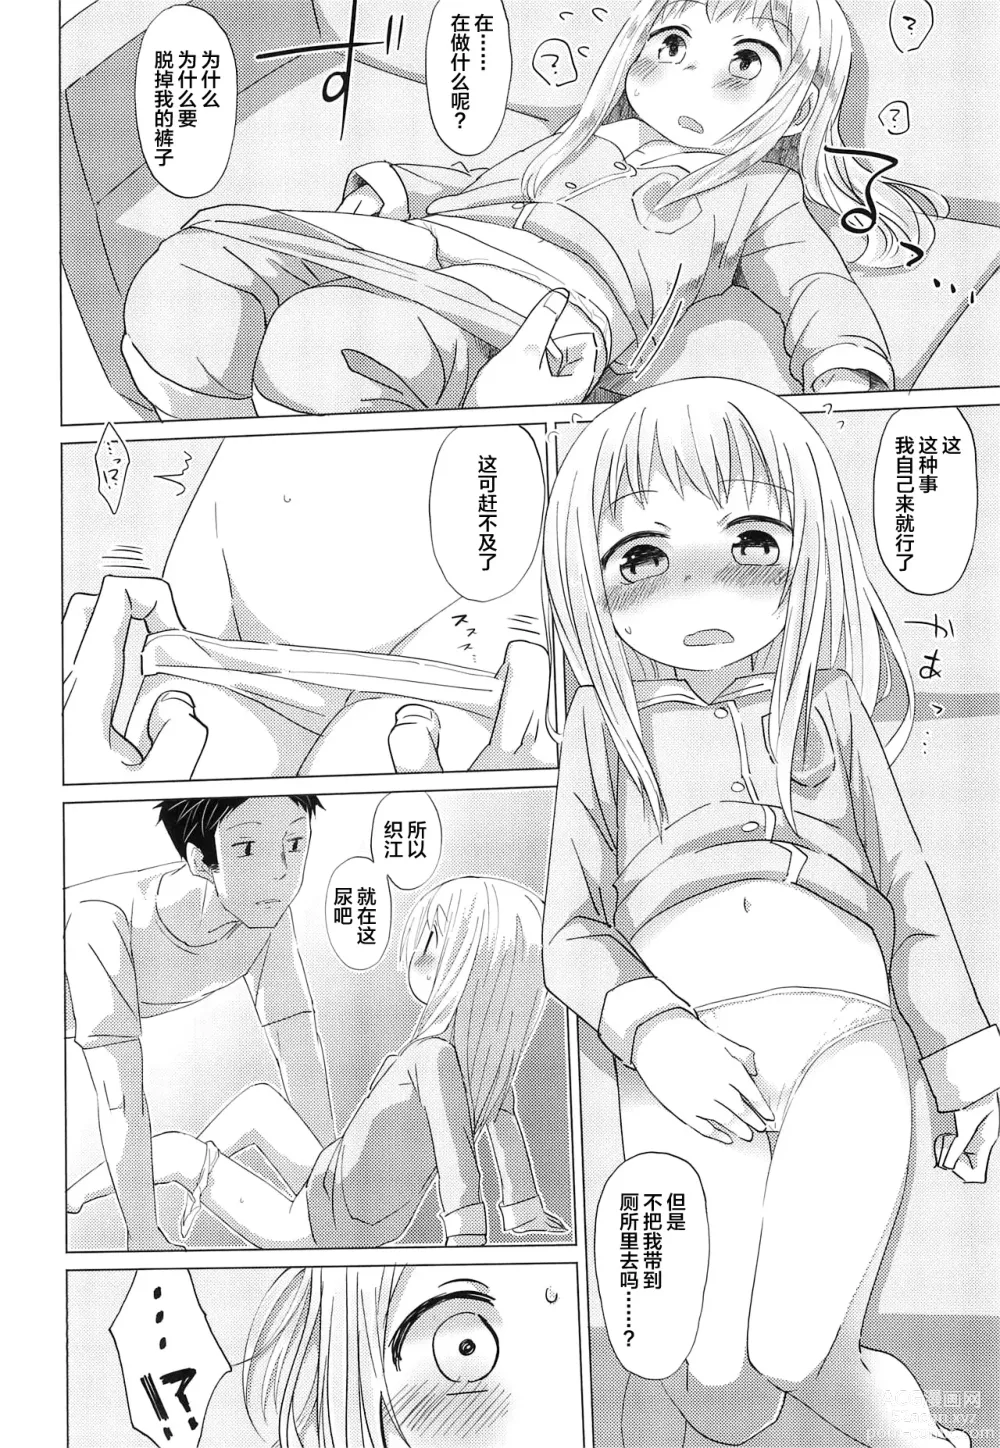 Page 6 of doujinshi 少女夜未央